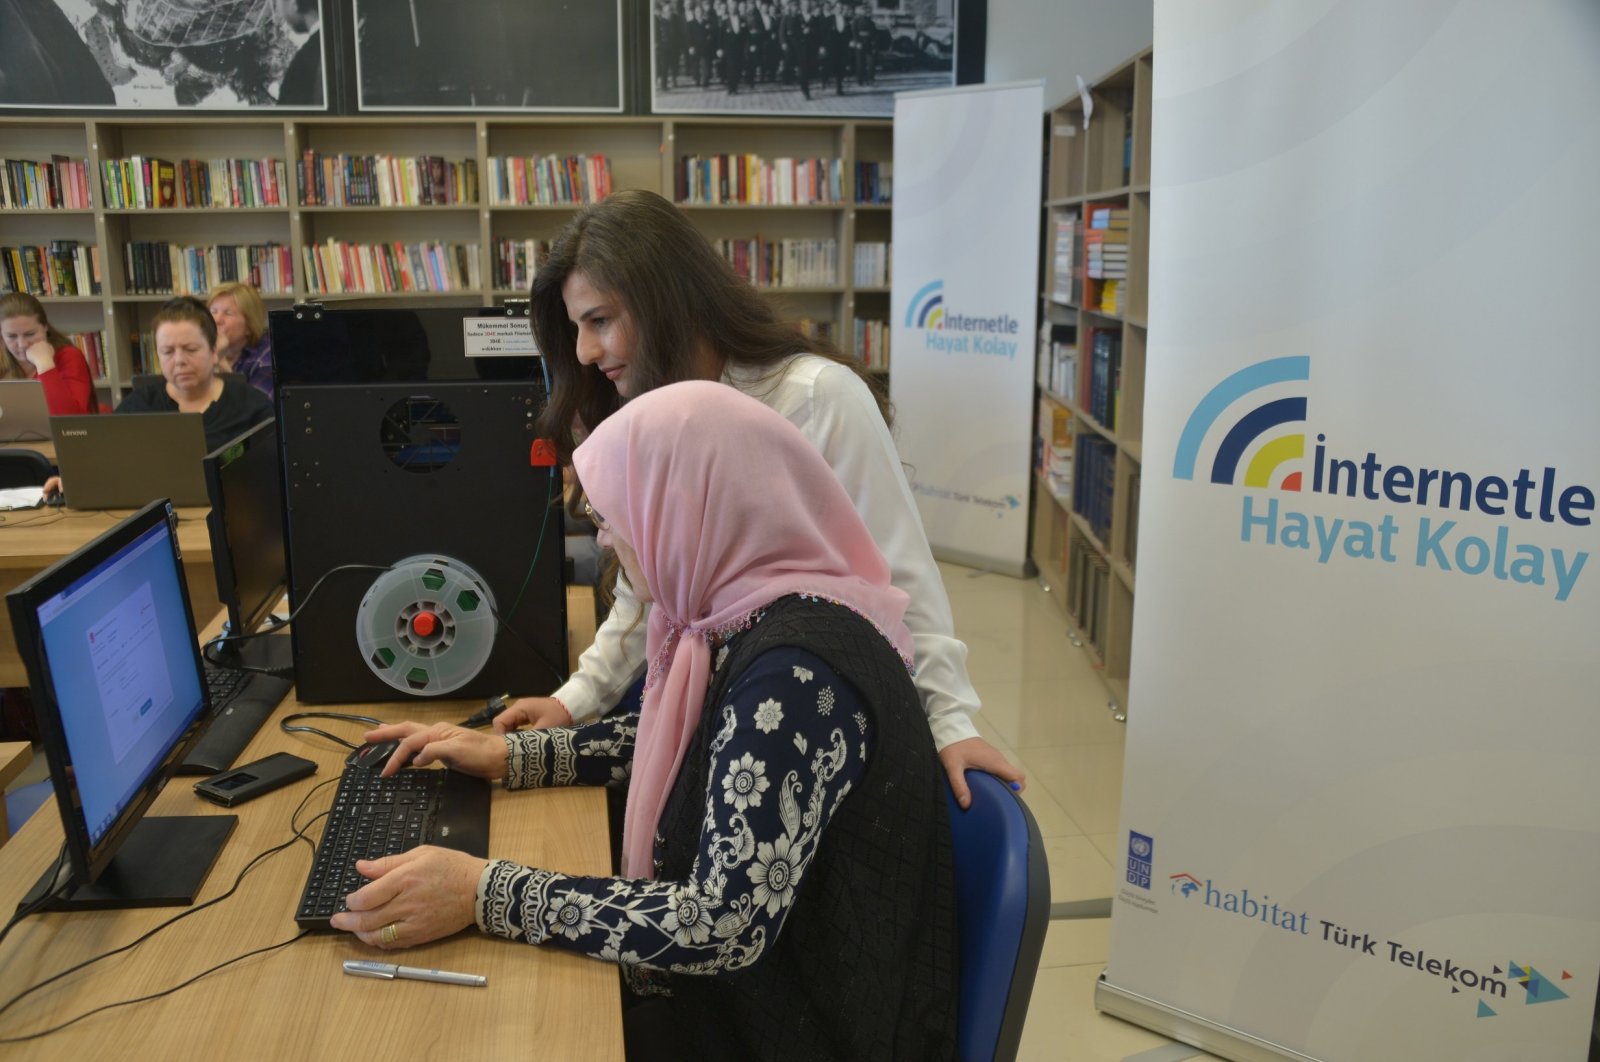 A woman attends a computer class in Kırklareli, northwestern Turkey on March 17, 2019. (Photo by Özgür Tiran)